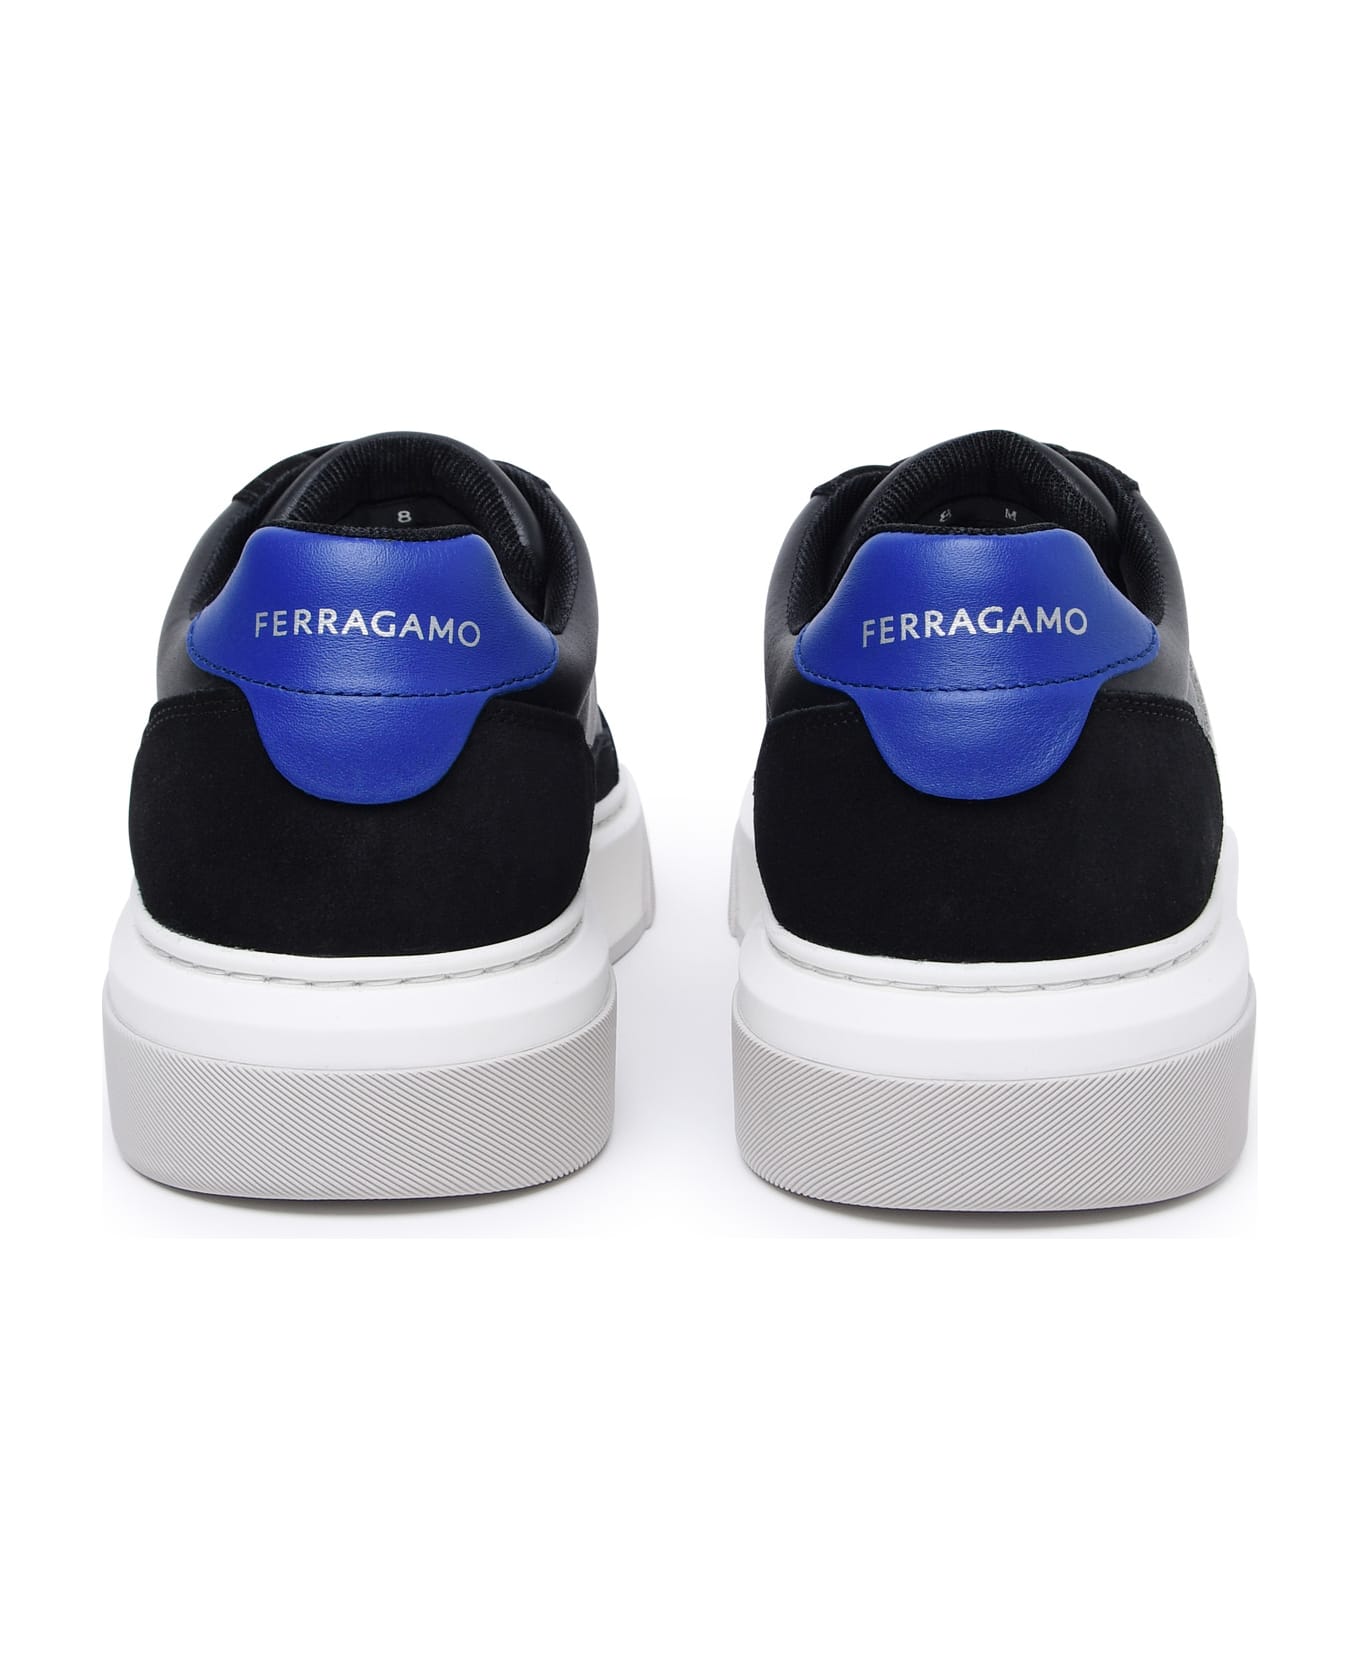 Ferragamo 'cassina' Black Leather Blend Sneakers - Black